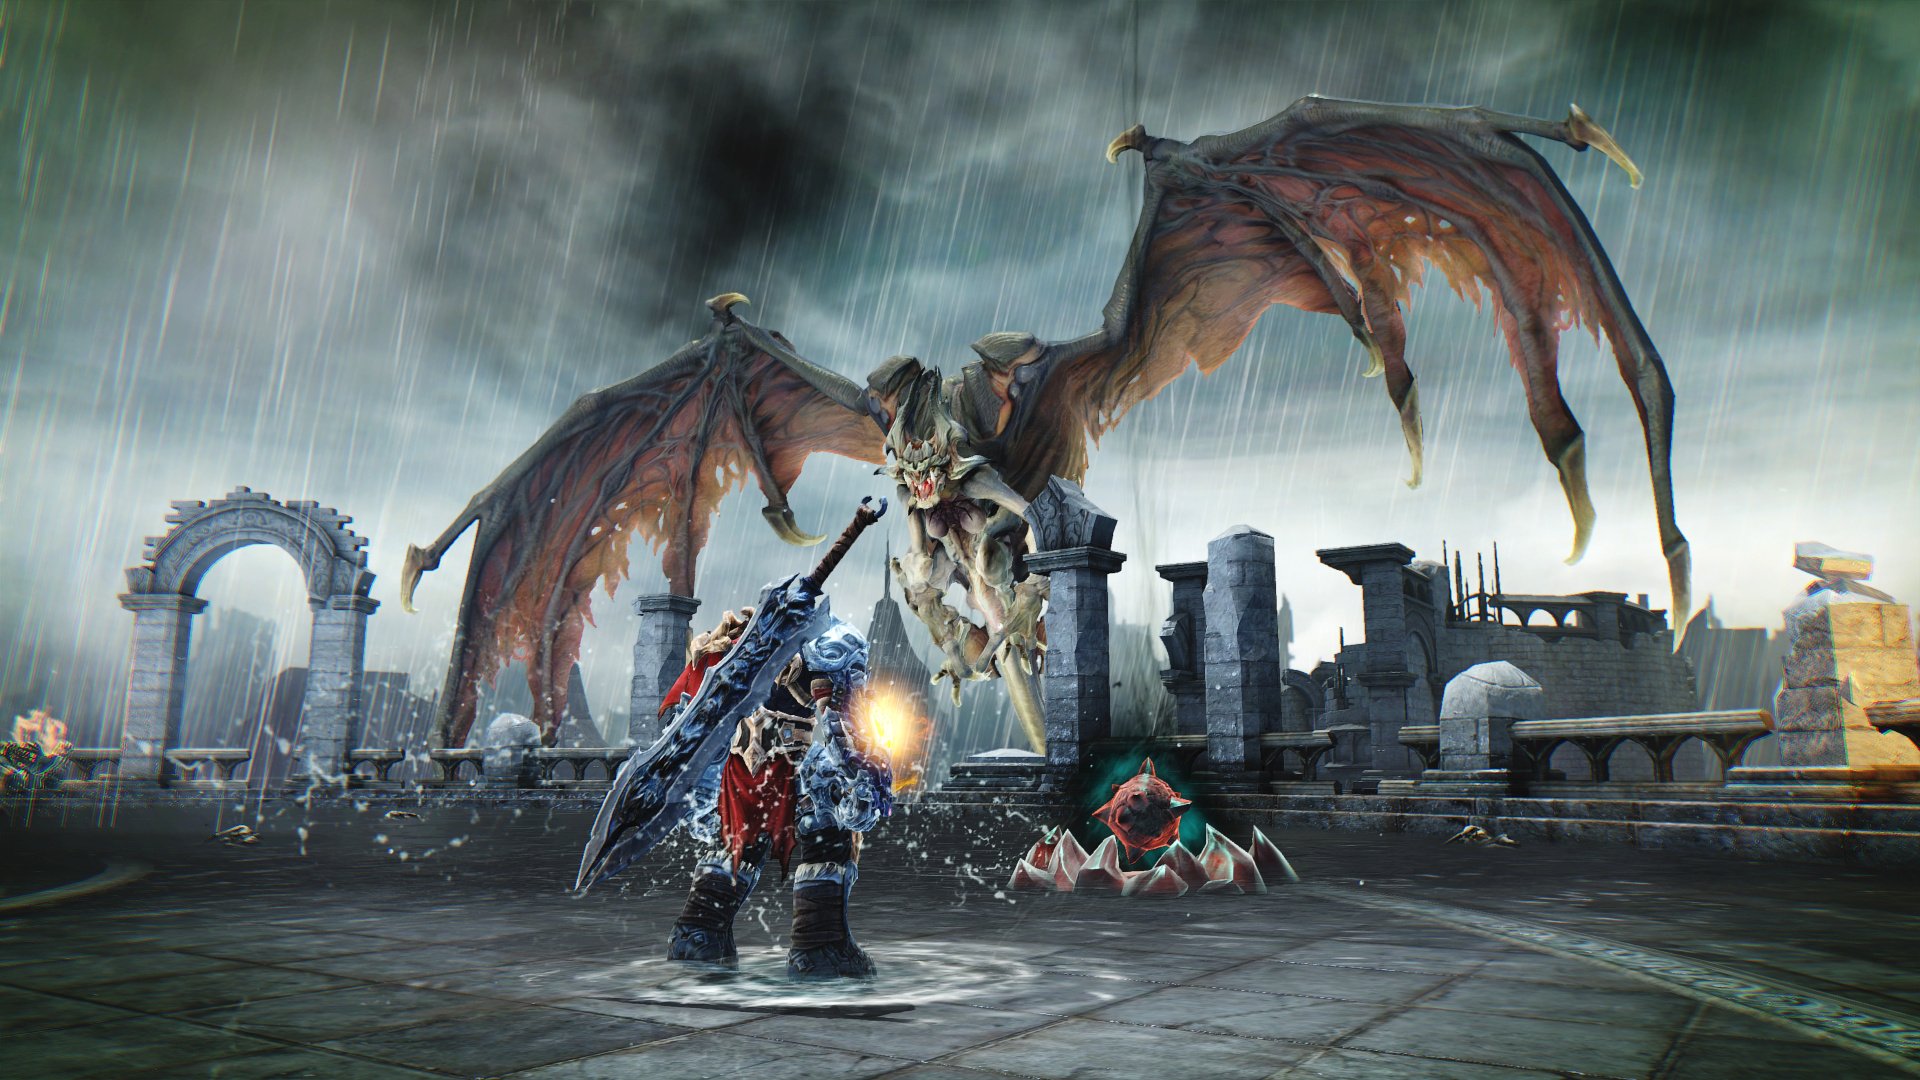 Darksiders: Warmastered Edition (Wii U) Game Profile | News, Reviews ...